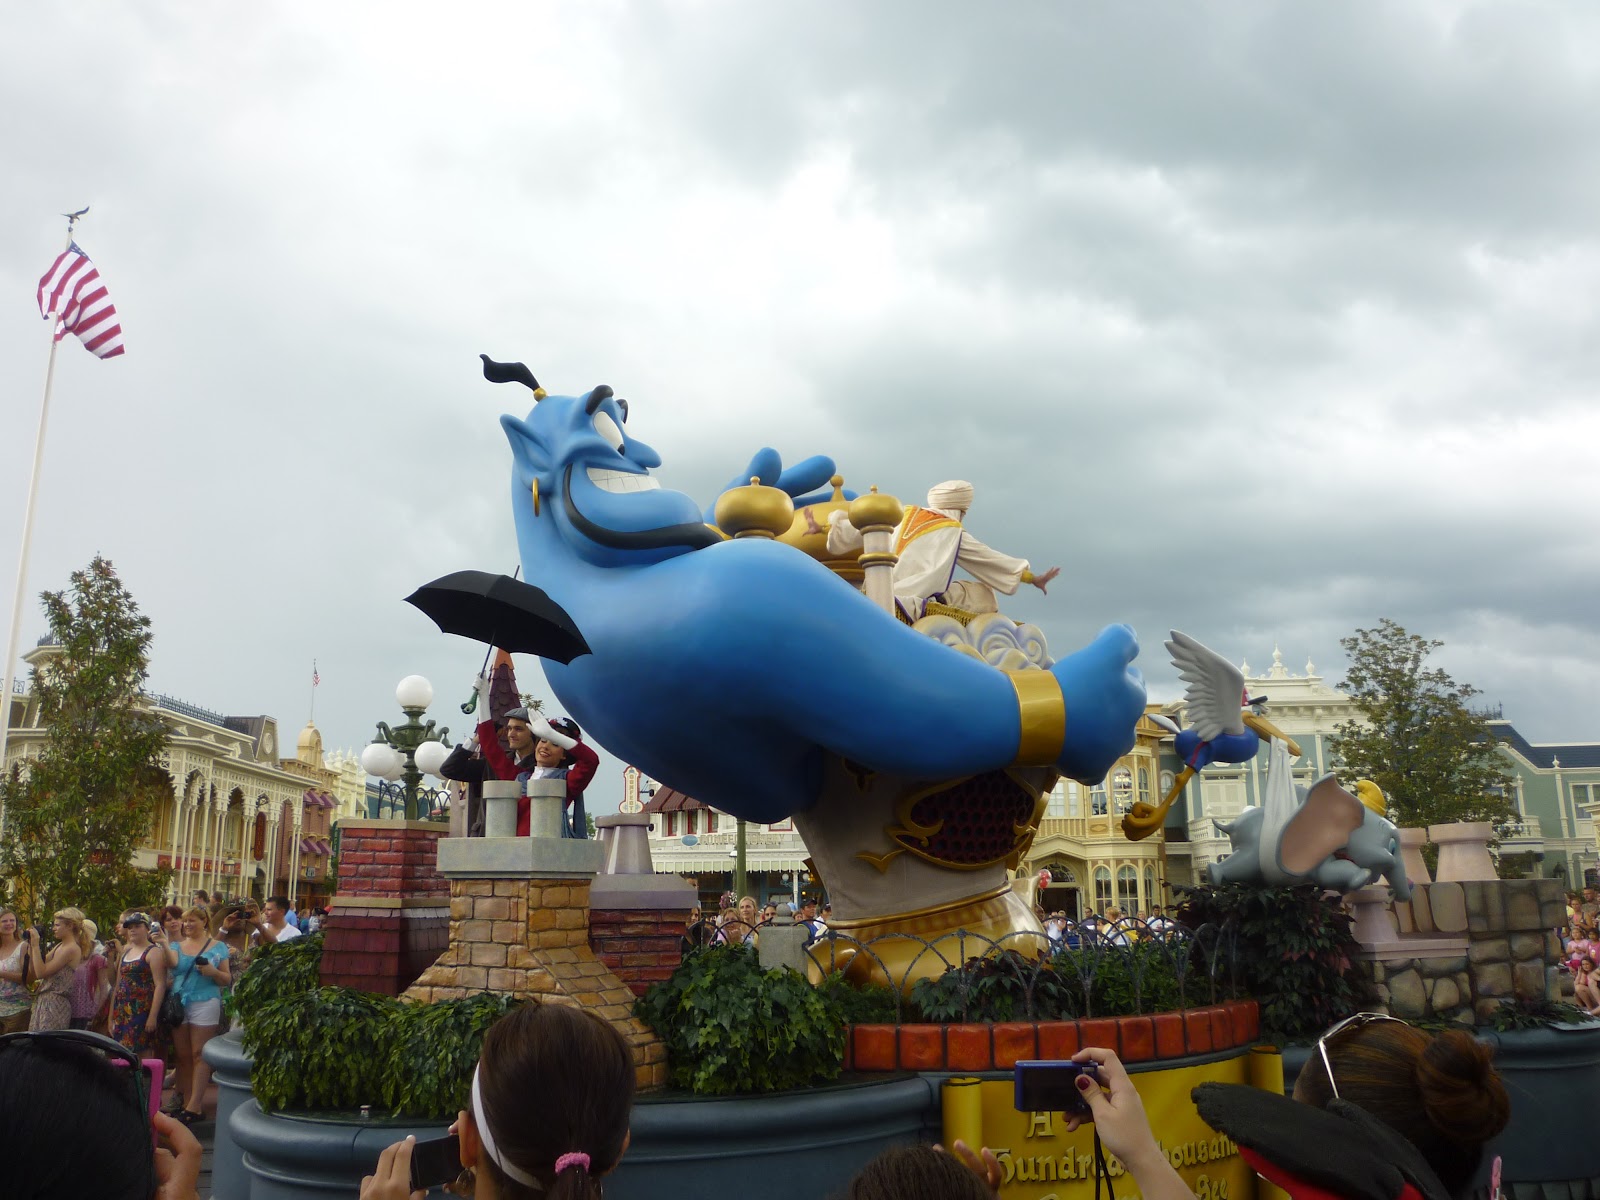 My Journey: Magic Kingdom, Disney World, Orlando Florida